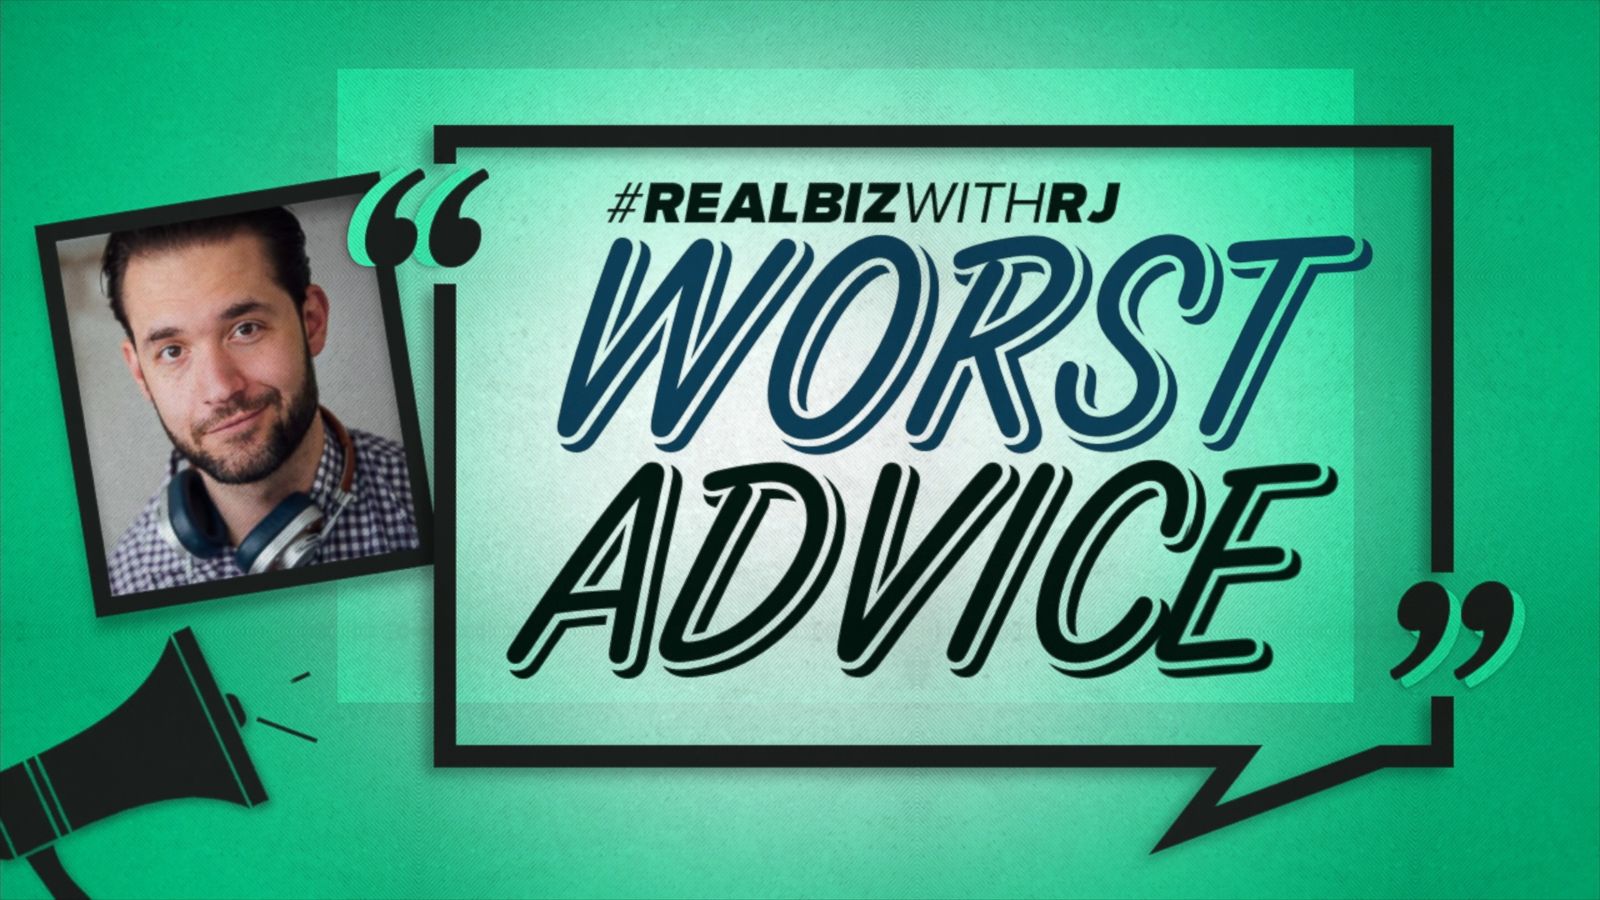 Worst Advice: Reddit Co-Founder Alexis Ohanian